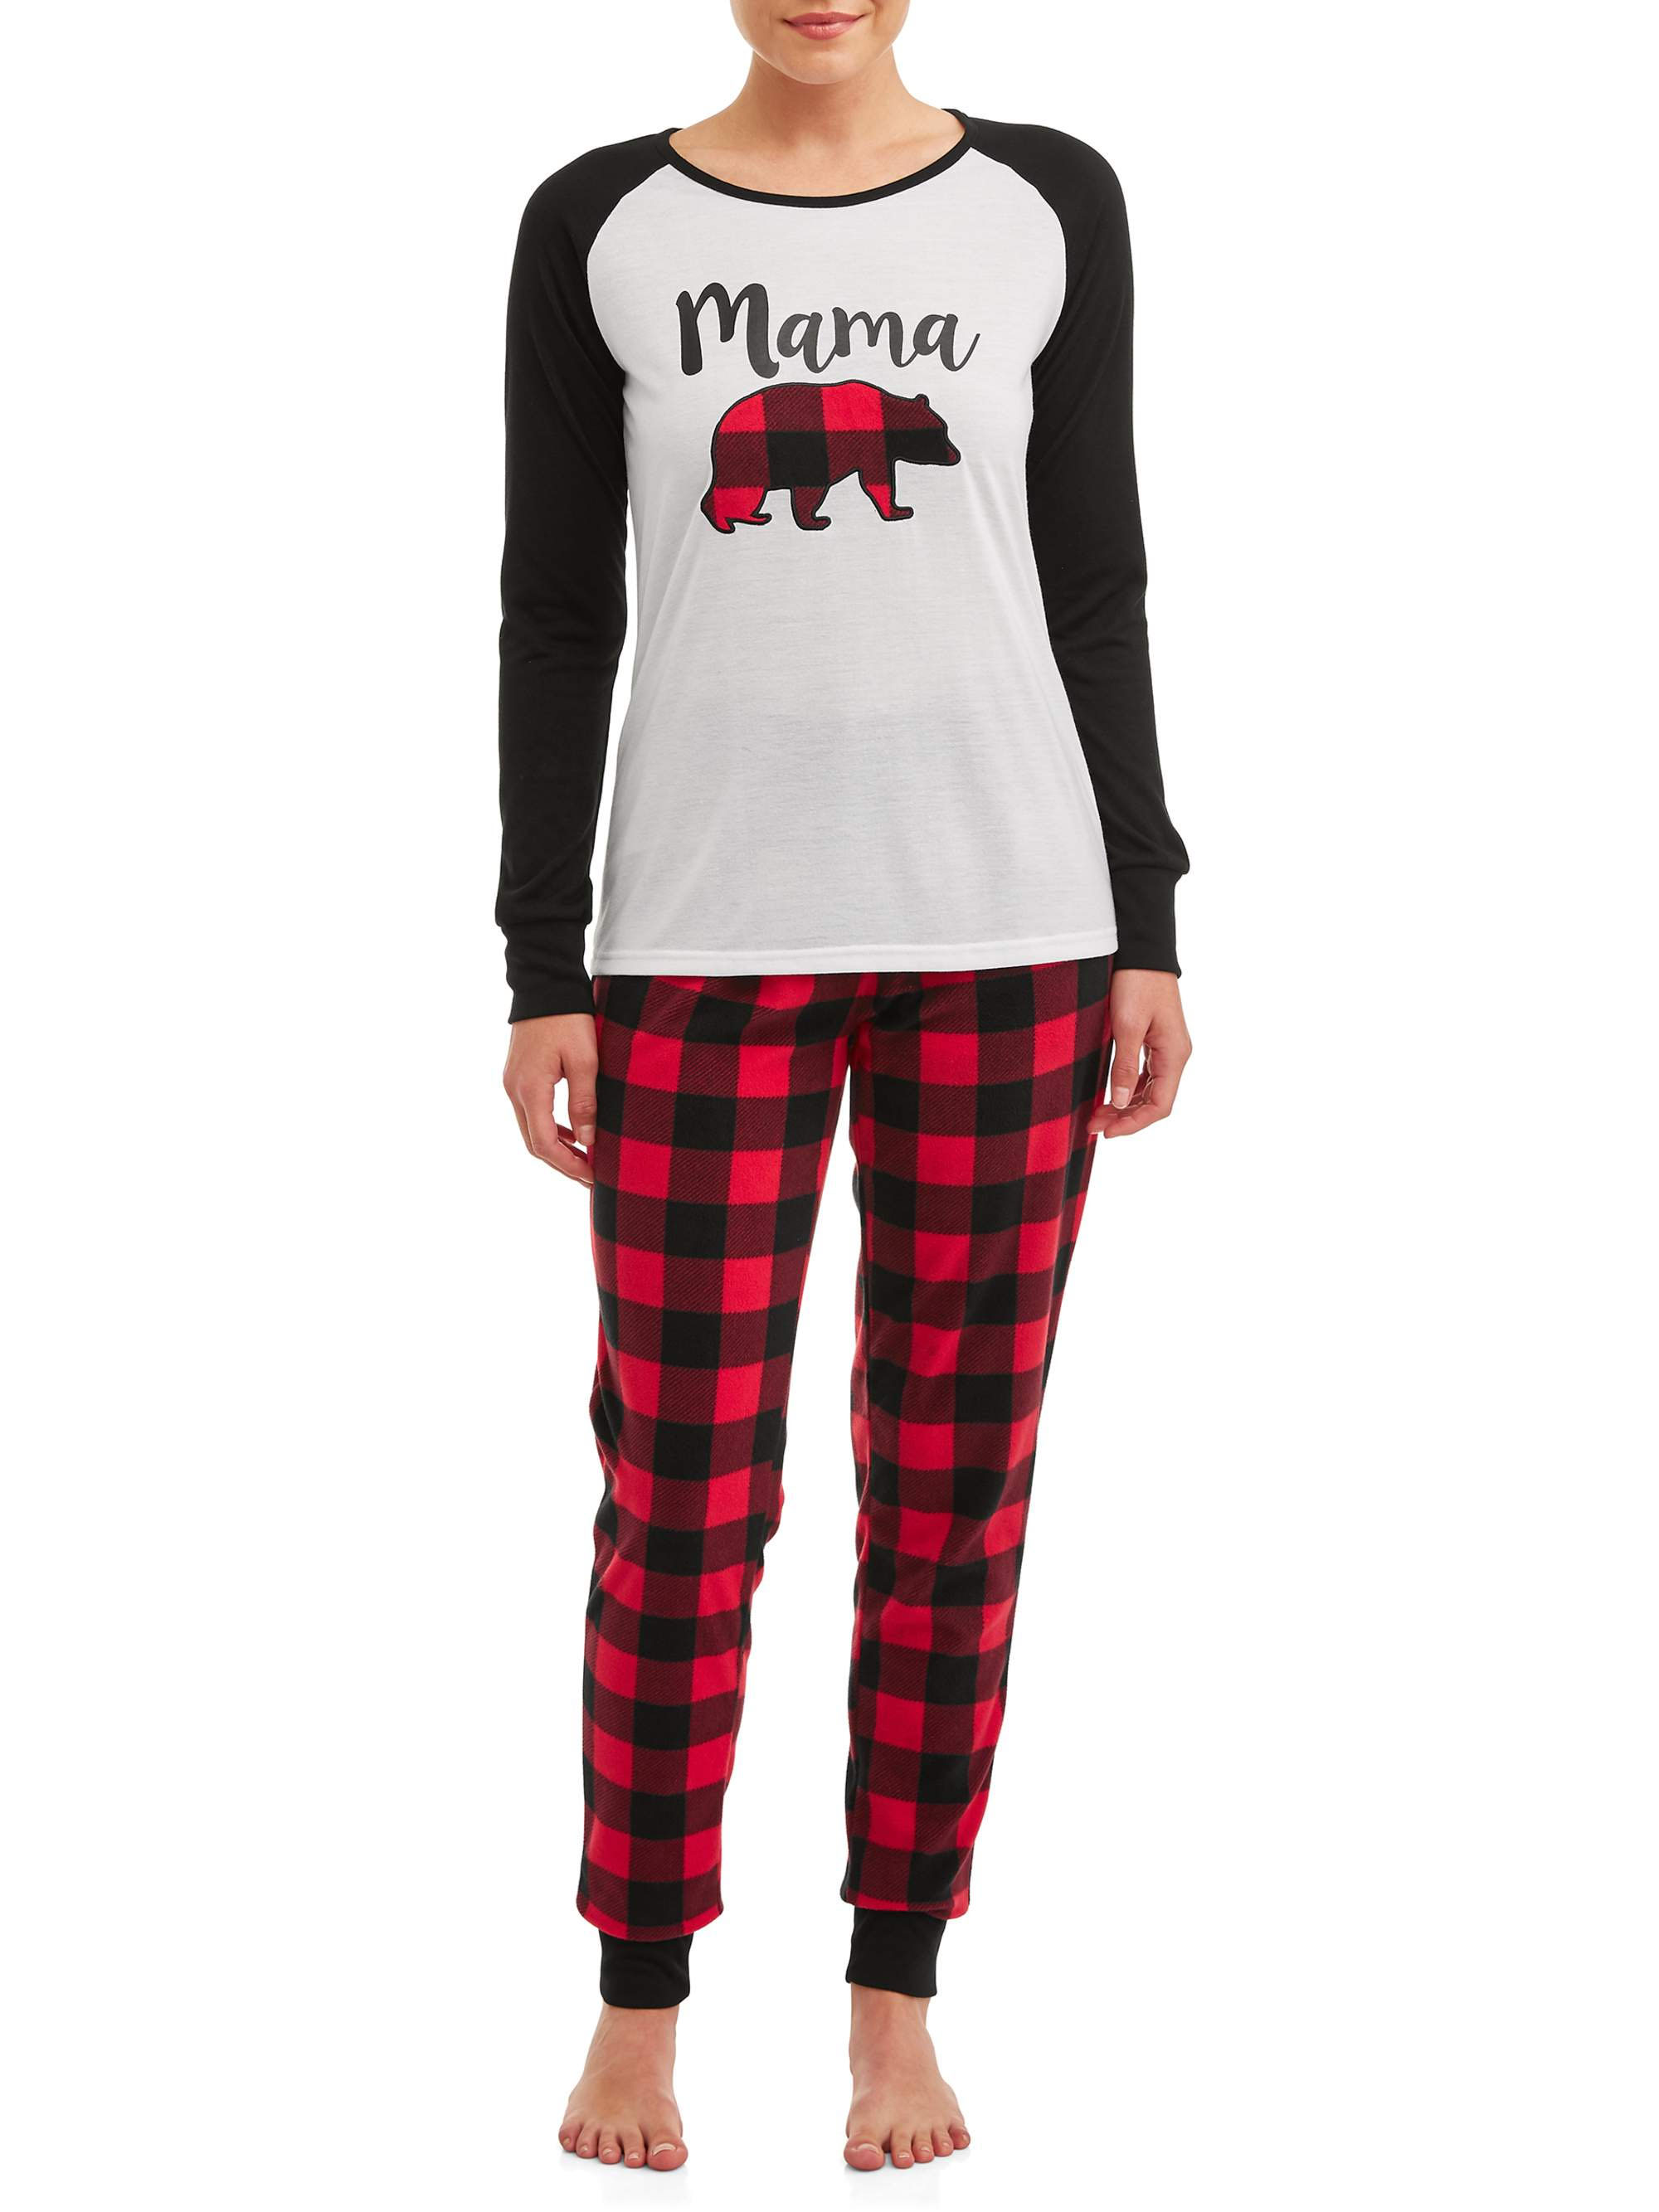 Herimmy Matching Family Christmas Pajamas Set Bear Print Soft Pjs Cotton Family Sleepwear